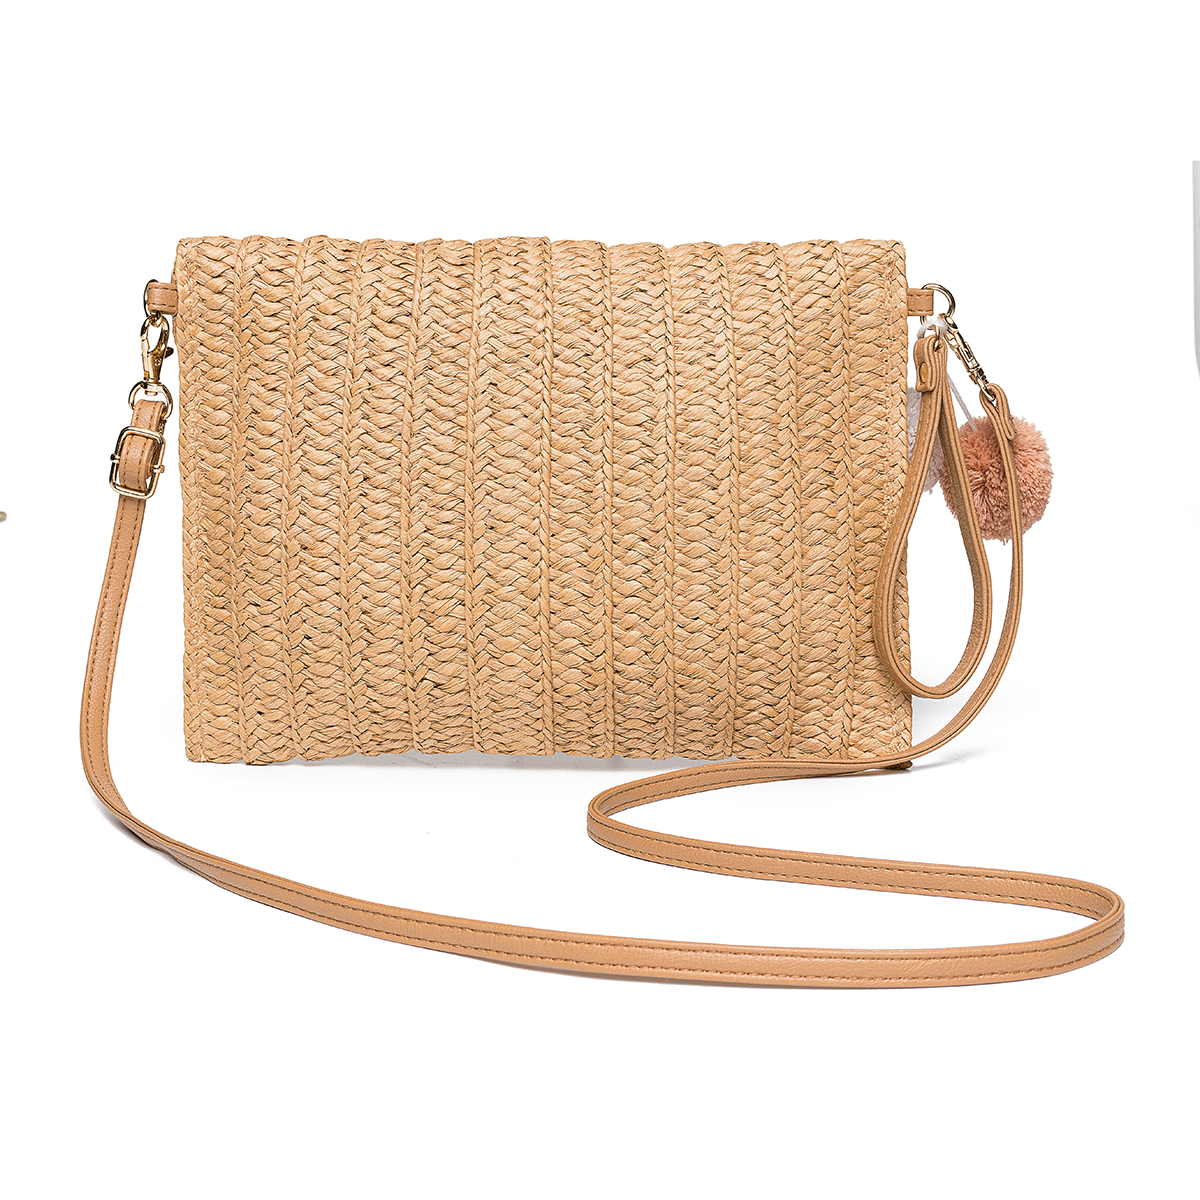 JOSEKO Straw Shoulder Bags For Women, Handmade Crossbody Summer Beach ...